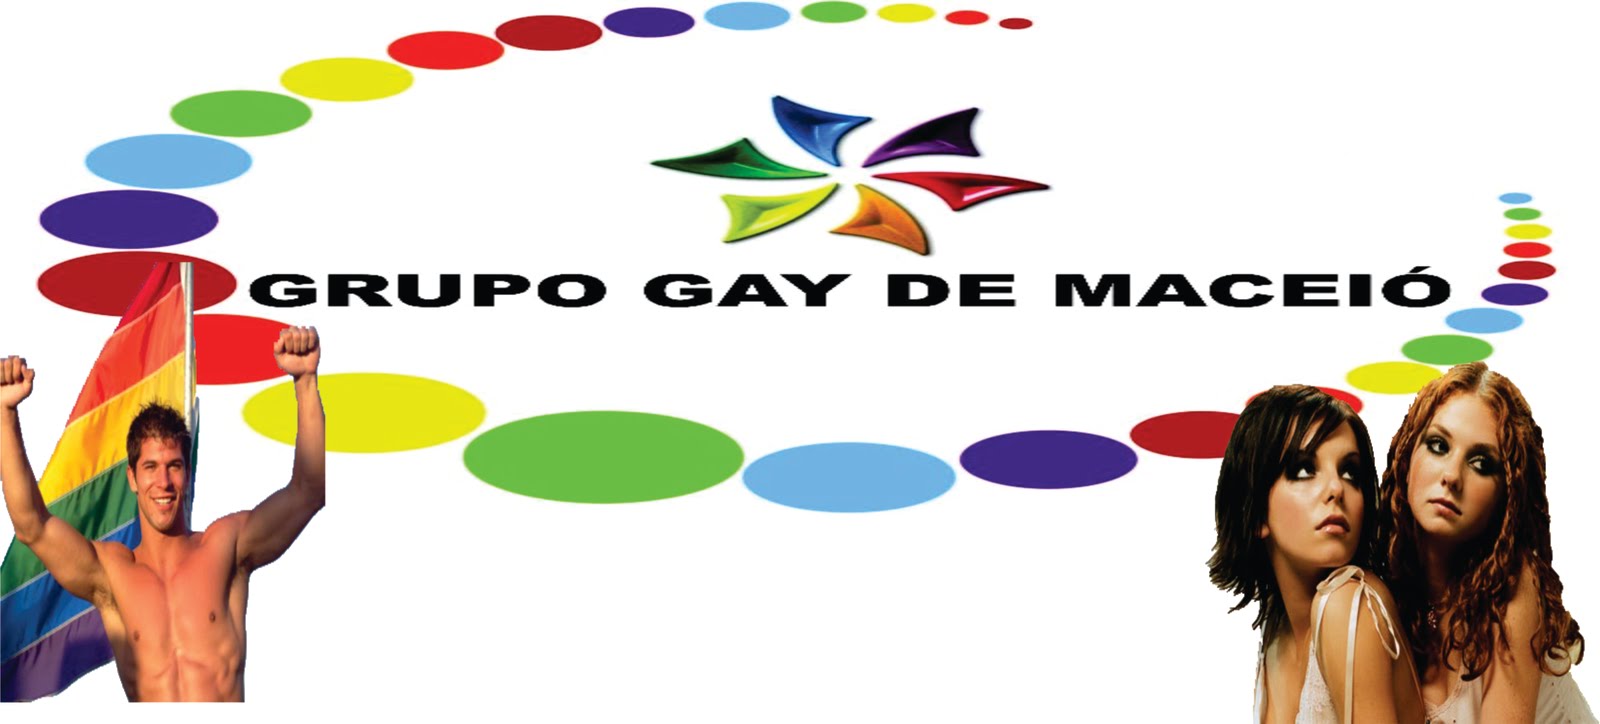 GRUPO GAY DE MACEIO